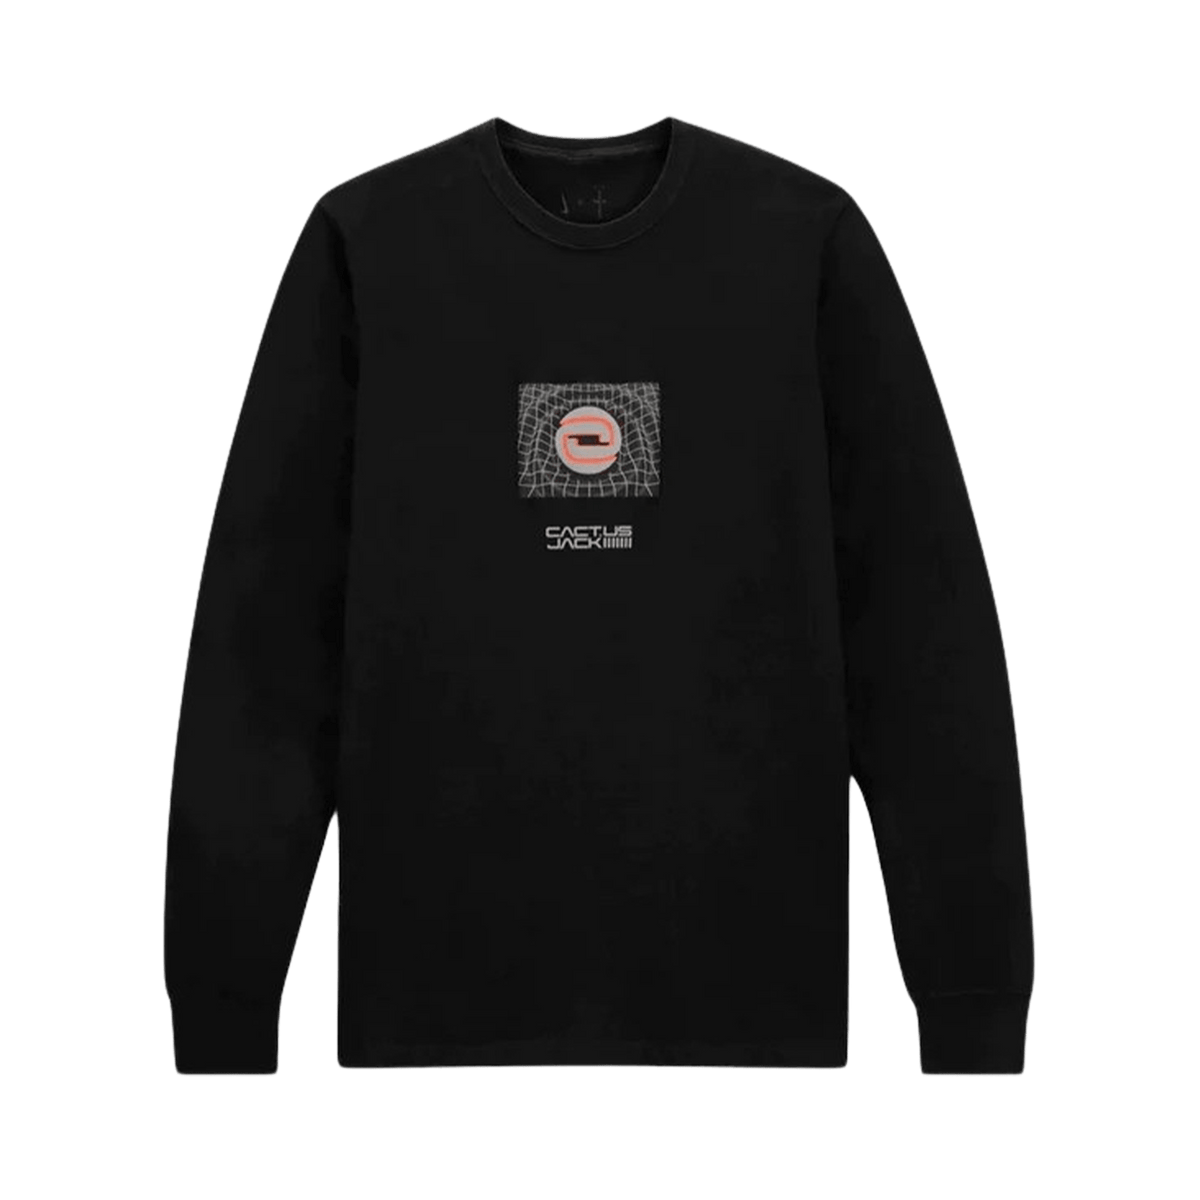 Nike Sportswear UNISEX - Sac bandoulière - black/anthracite/noir 